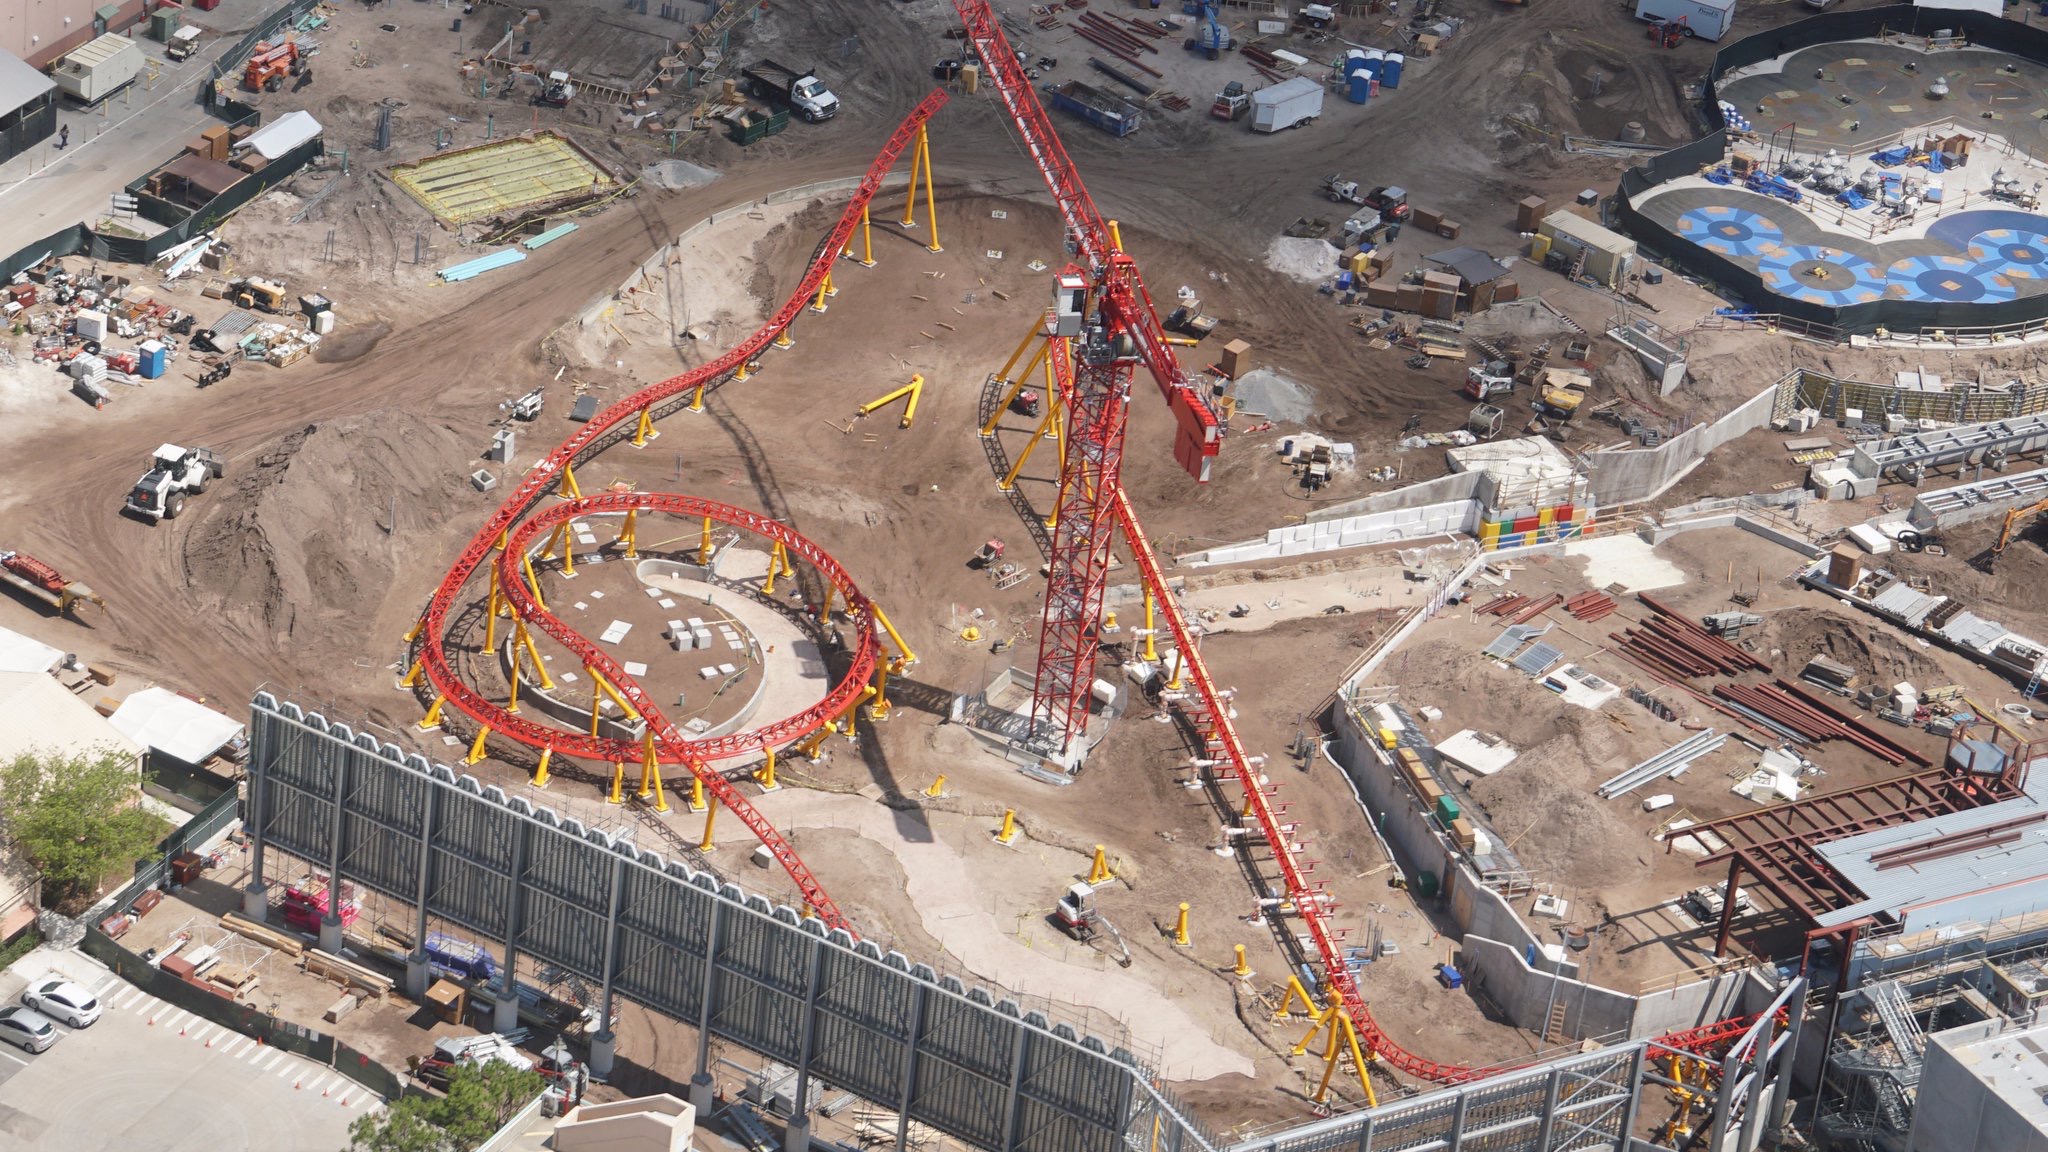 Star Wars Land Disneys Hollywood Studios Construction Updates